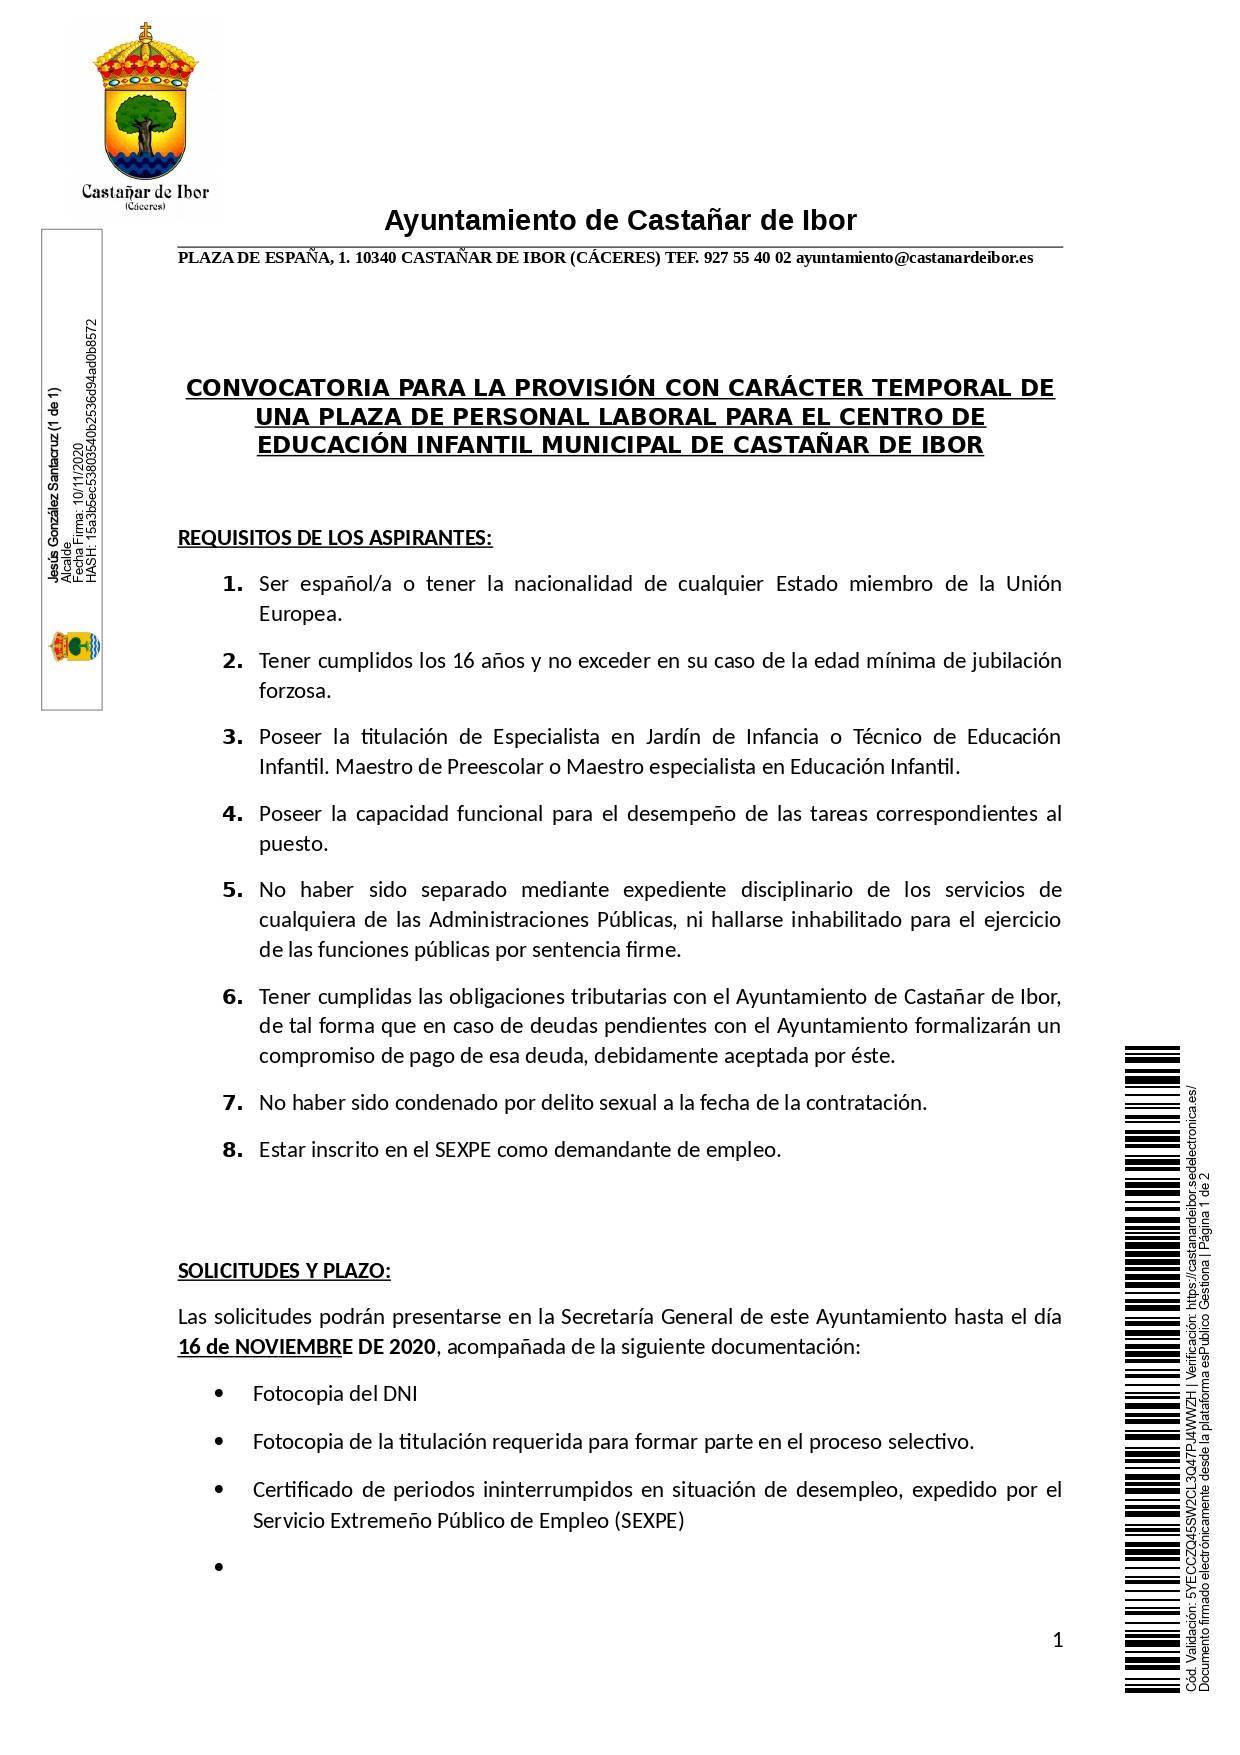 Maestro especialista en educación infantil (2020) - Castañar de Ibor (Cáceres) 1